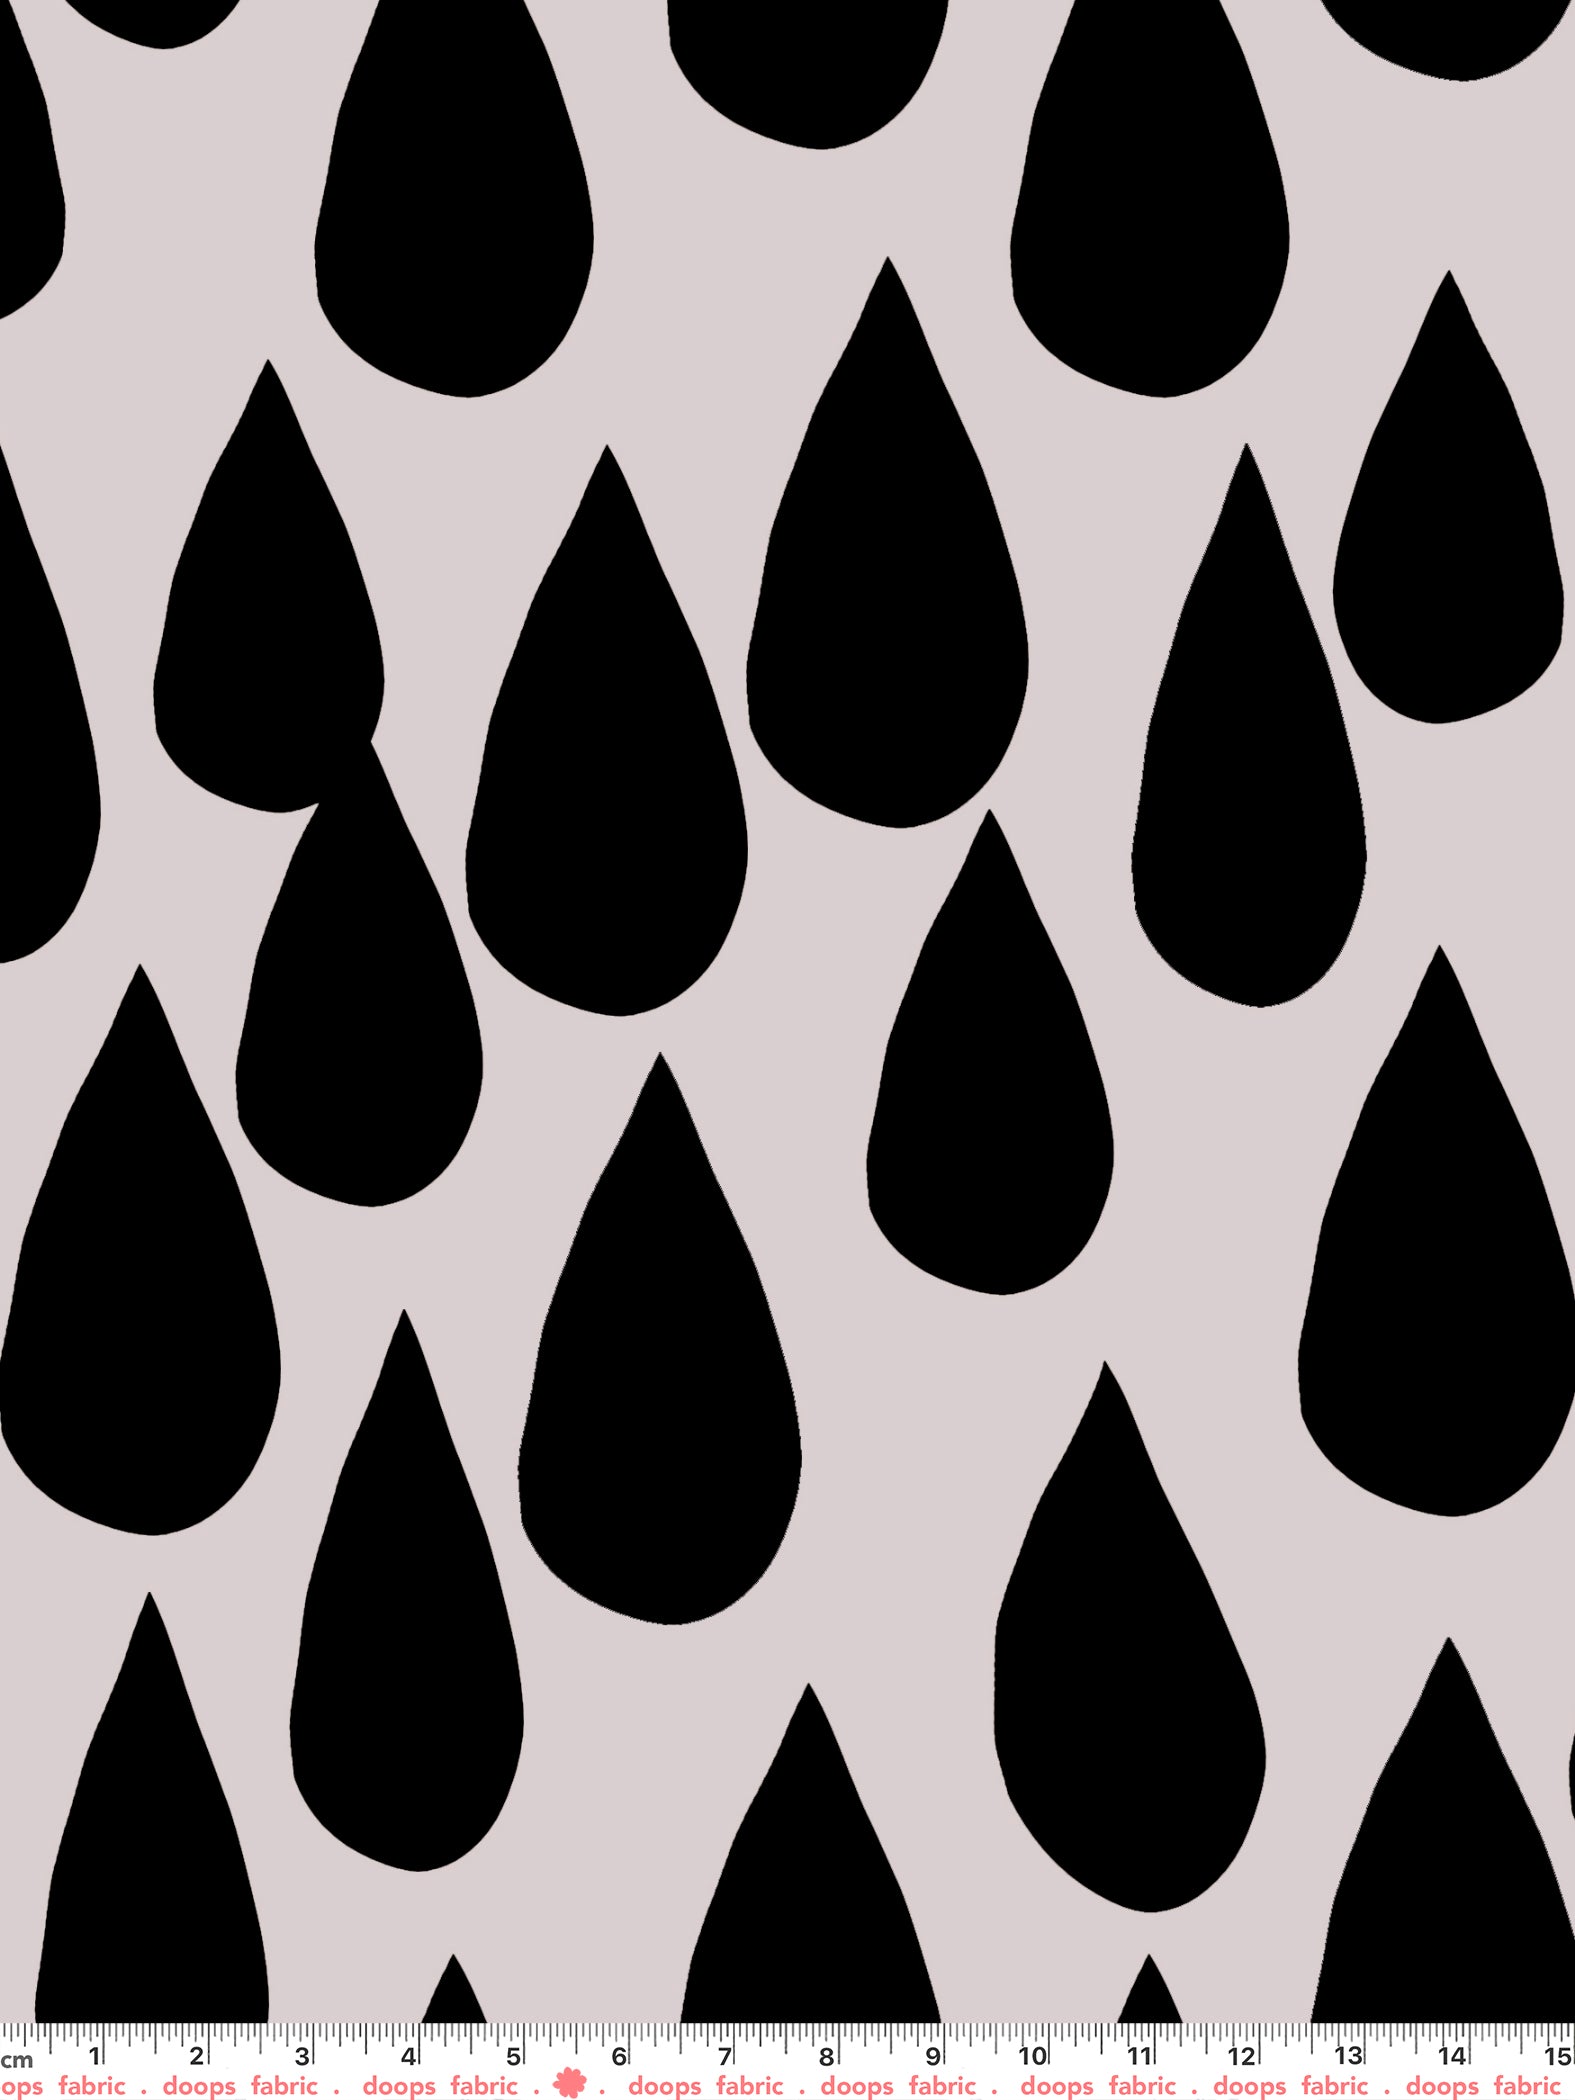 Drops (black) organic cotton linen